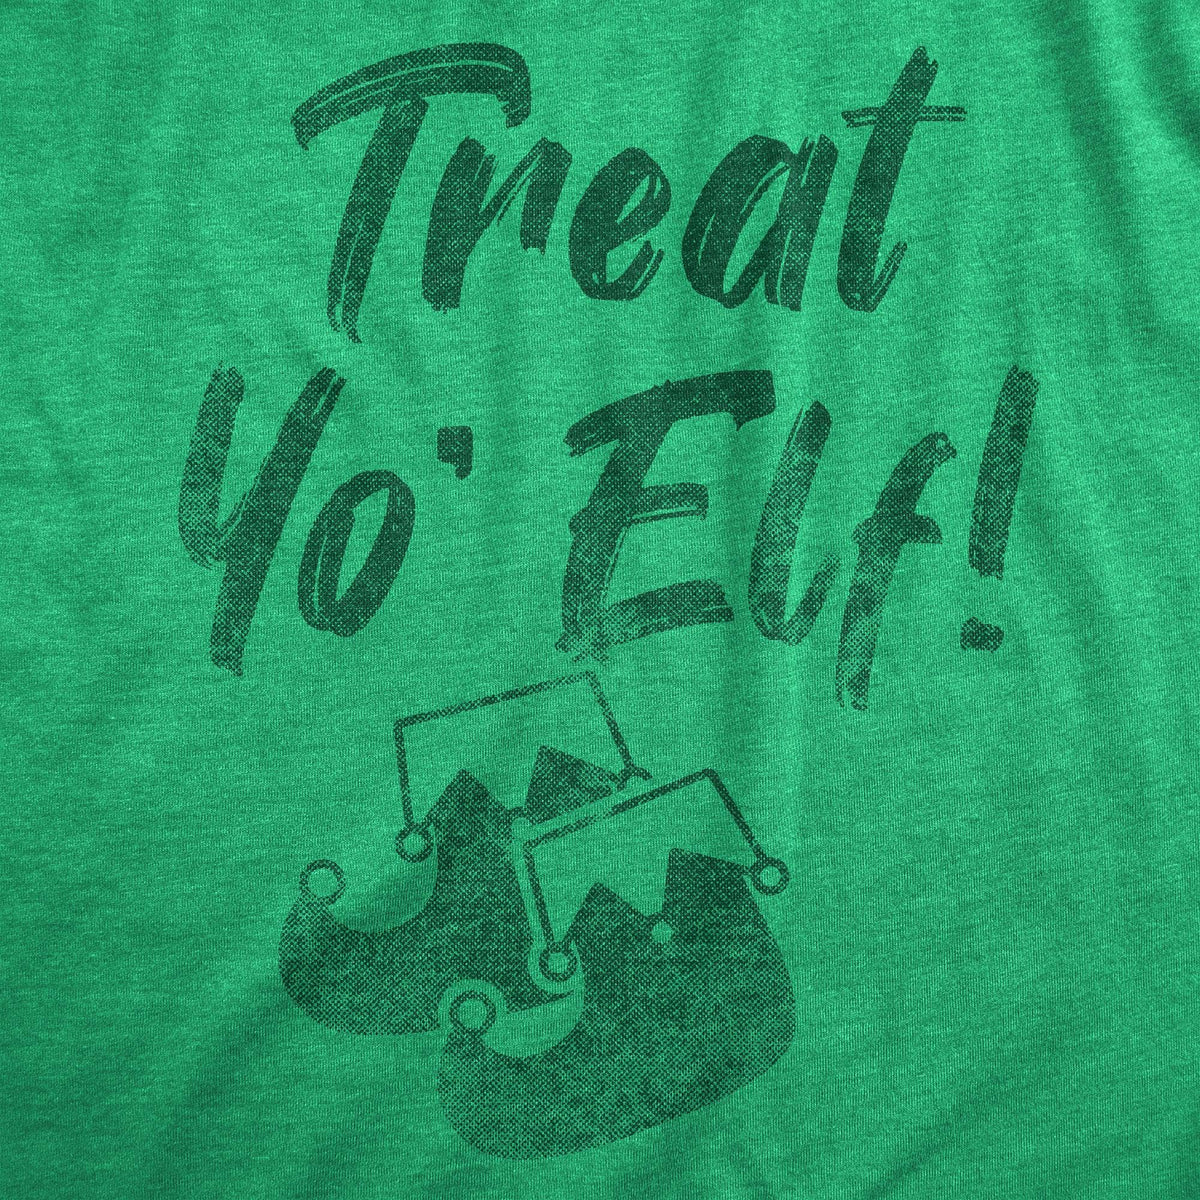 Treat Yo Elf Women&#39;s Tshirt  -  Crazy Dog T-Shirts